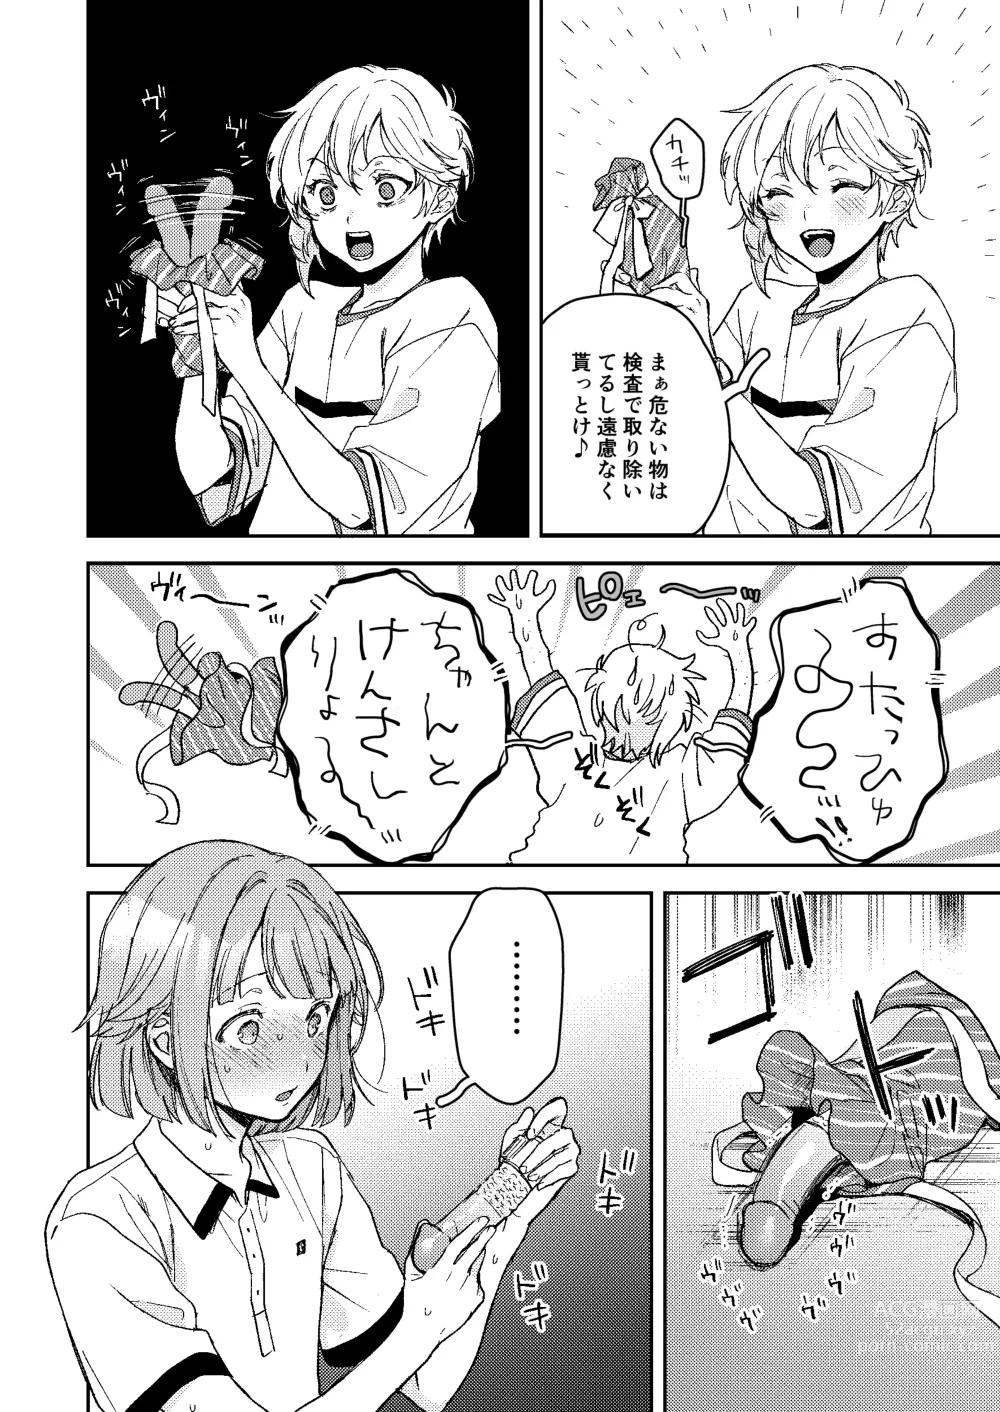 Page 5 of doujinshi Enema Ana 2